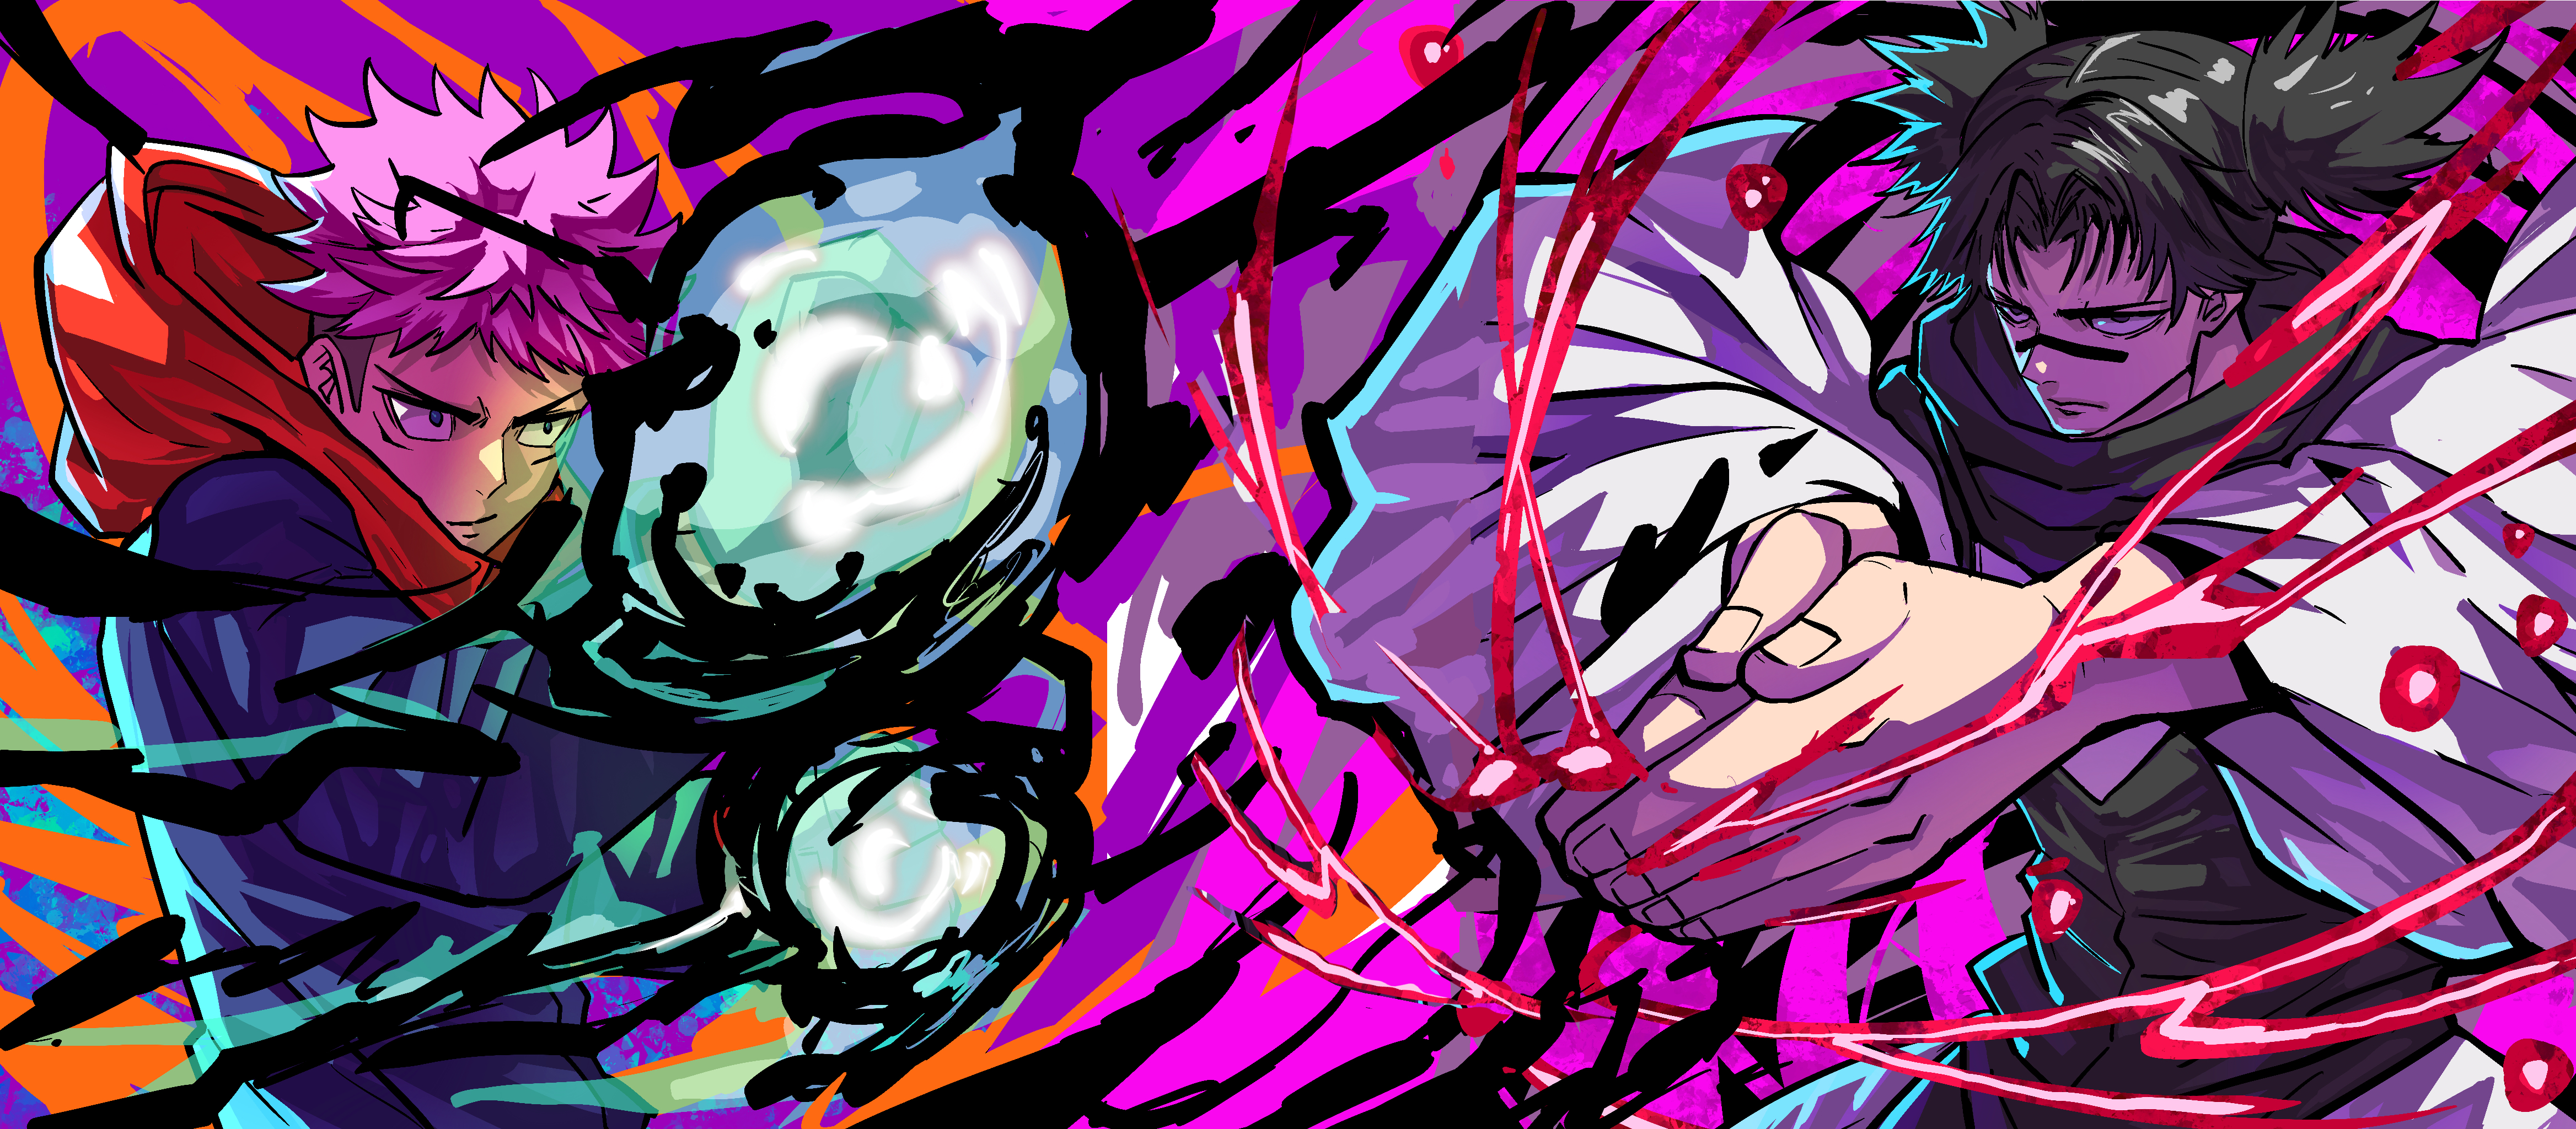 Choso / Jujutsu Kaisen / Anime Wallpaper by mvrusv on DeviantArt